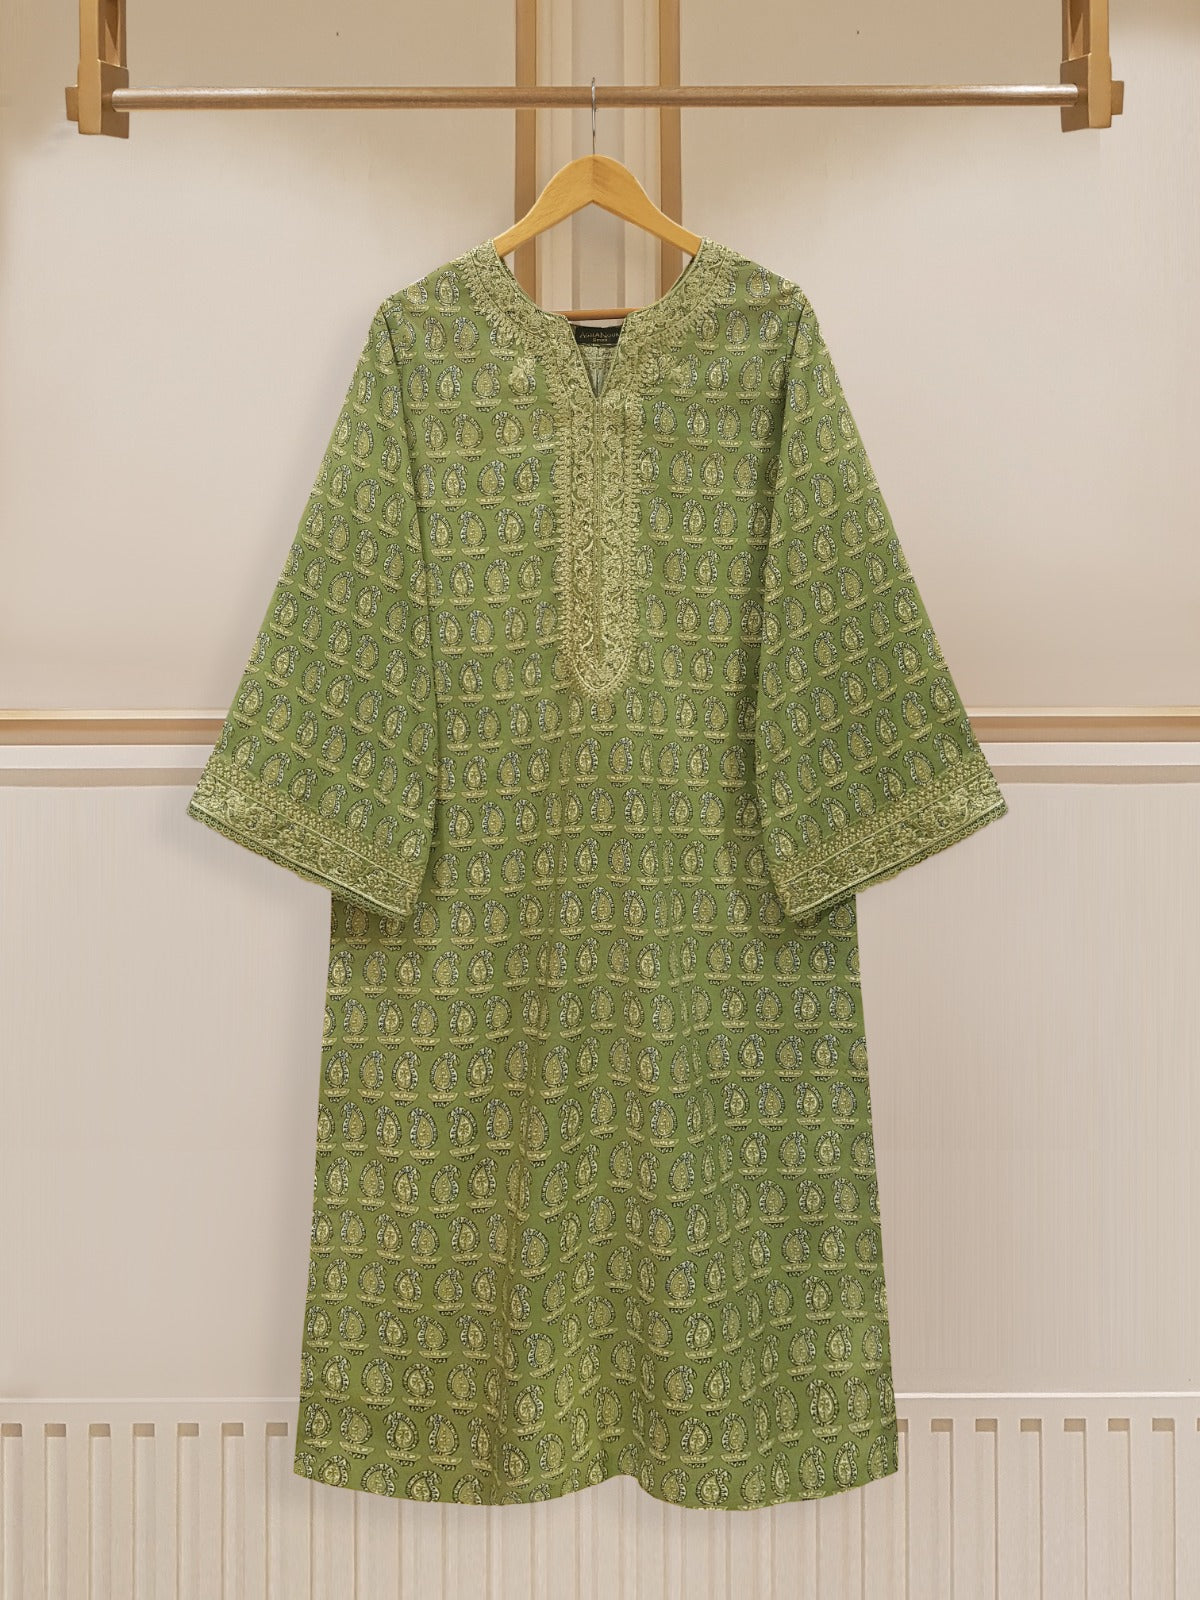 42 Inch Regular Wear Dark Green Polyester Printed Pant Shirt Combo Pack,  For Apparel, Handwash at Rs 350/set in Surat